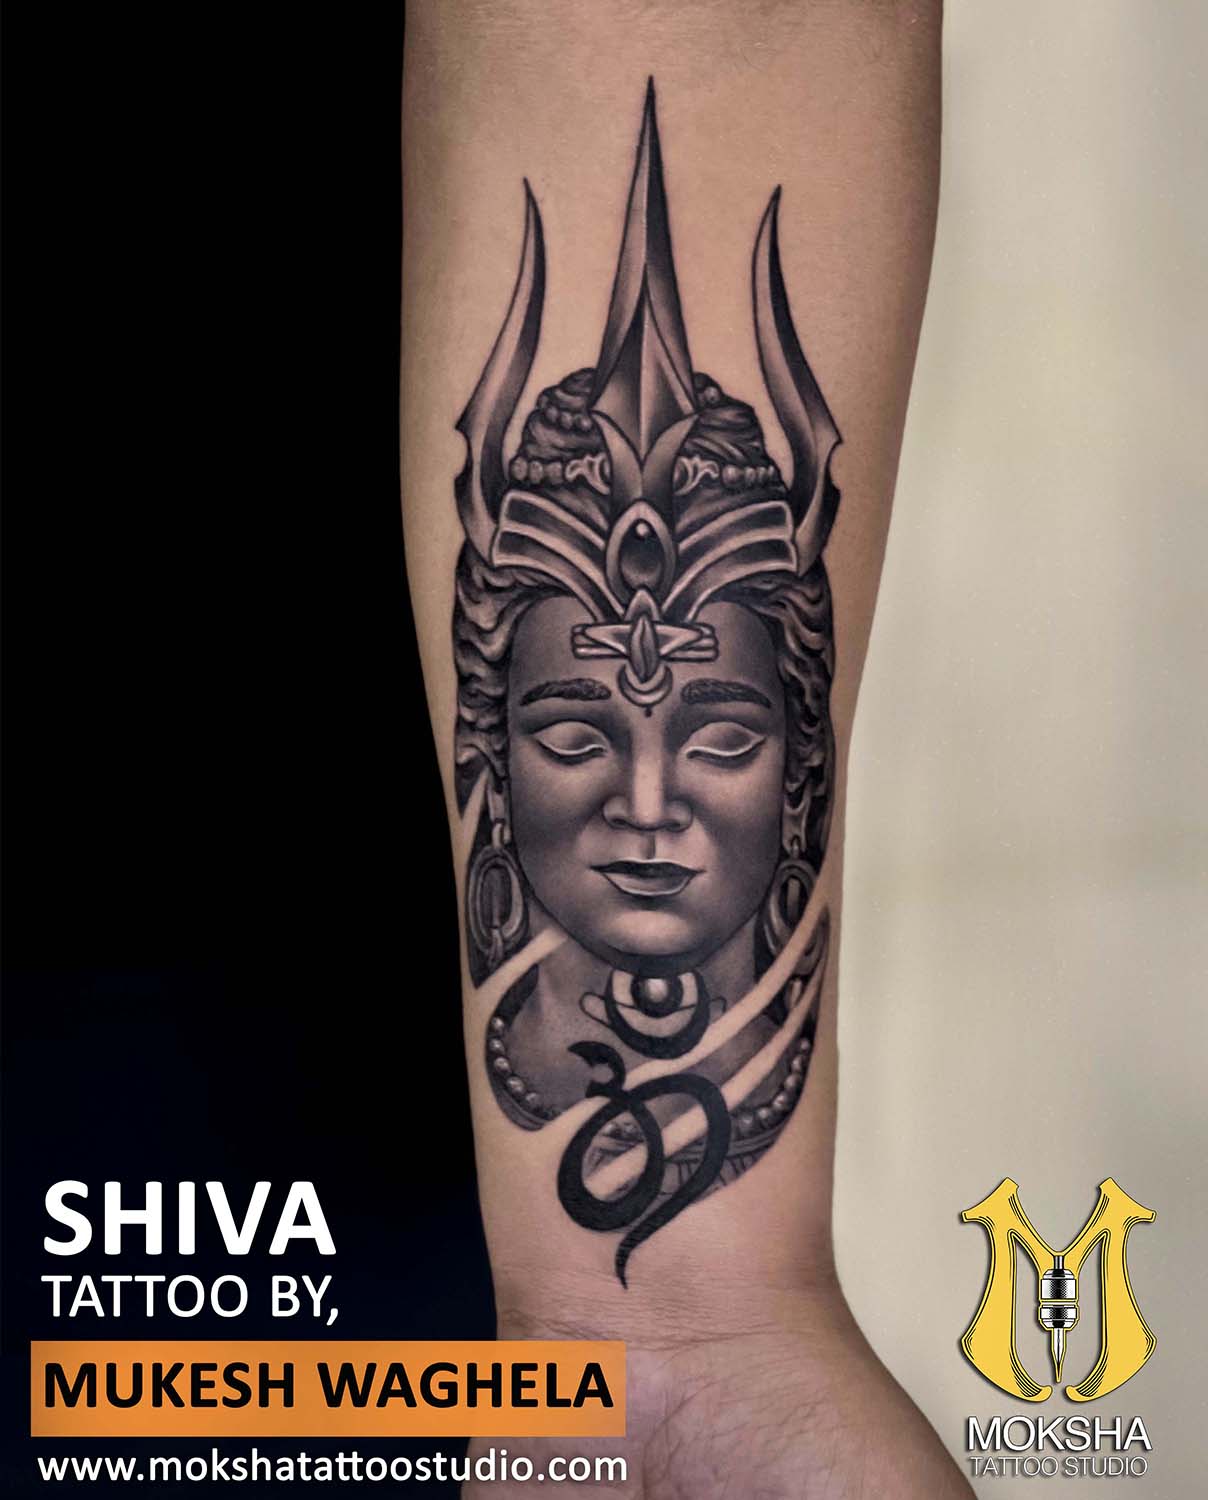 Shiva Tattoo By Mukesh Waghela The Best Tattoo Artist In Goa At Moksha Tattoo Studio Goa India. - Best Tattoo Studio Goa, Safe, Hygienic - Moksha Tattoo